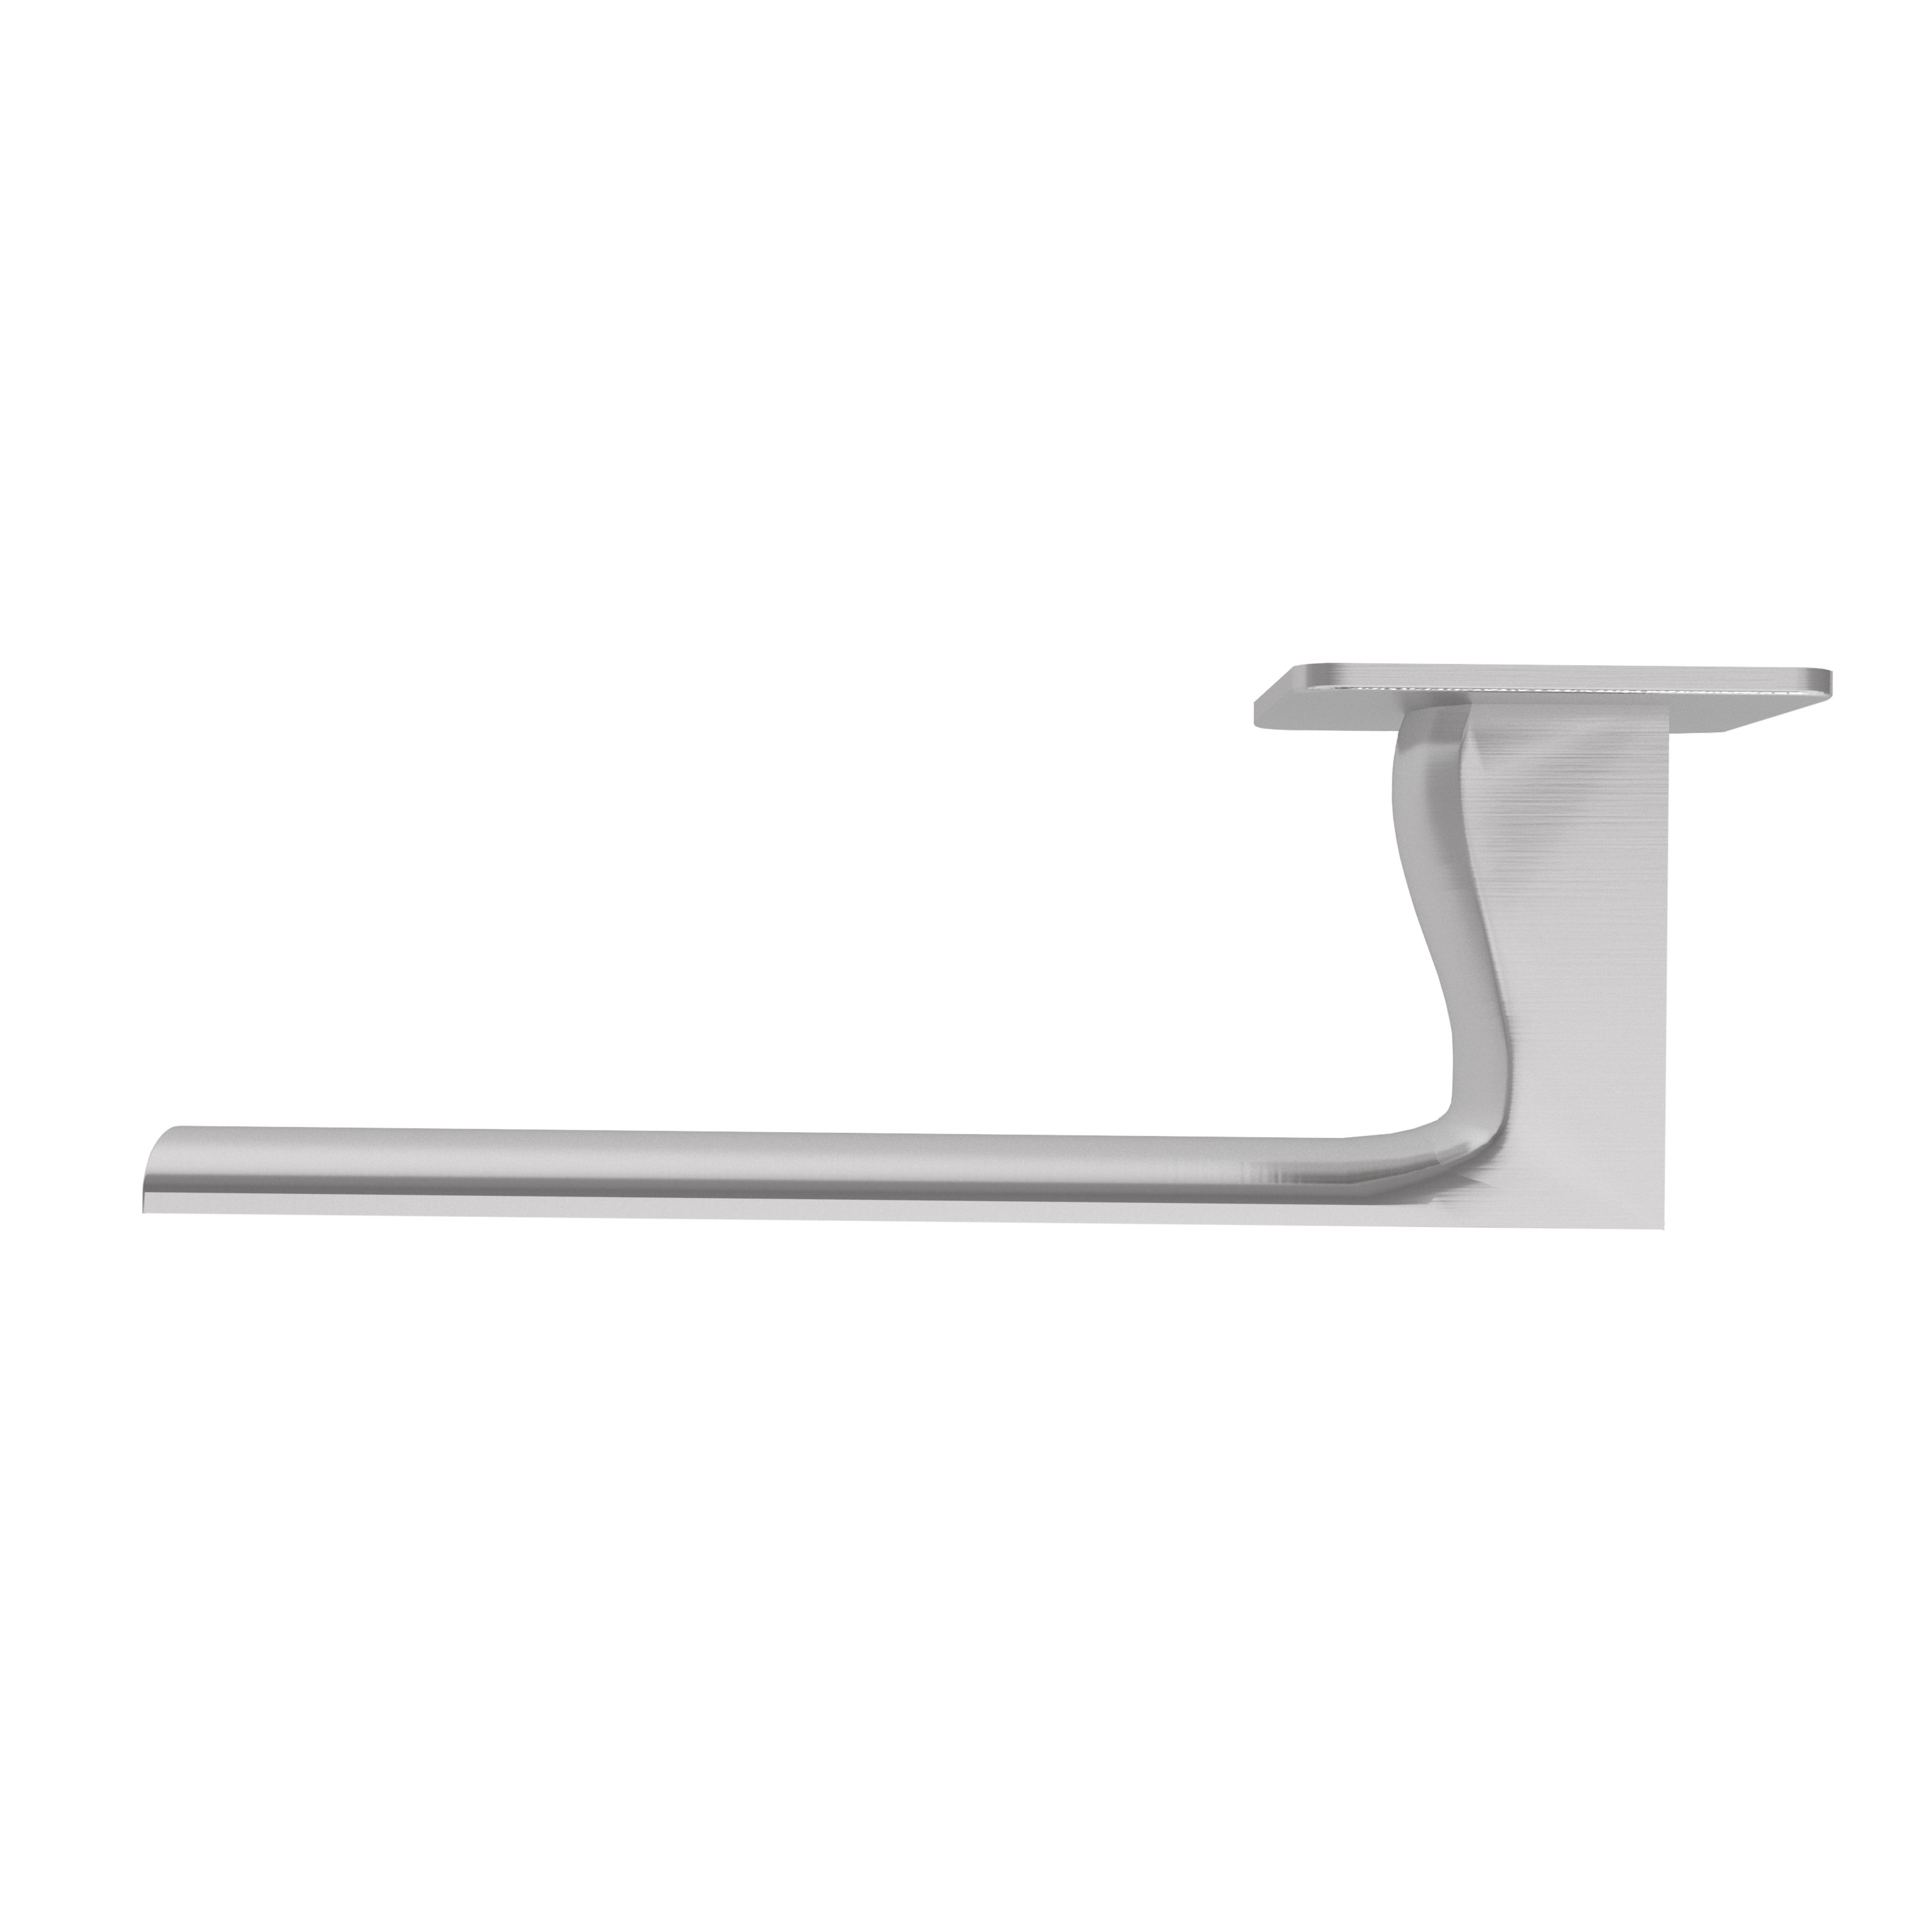 Türgriff mit Flachrosette eckig L-Form gerade Modell Ronara Edelstahl Magnetclip Klasse 1